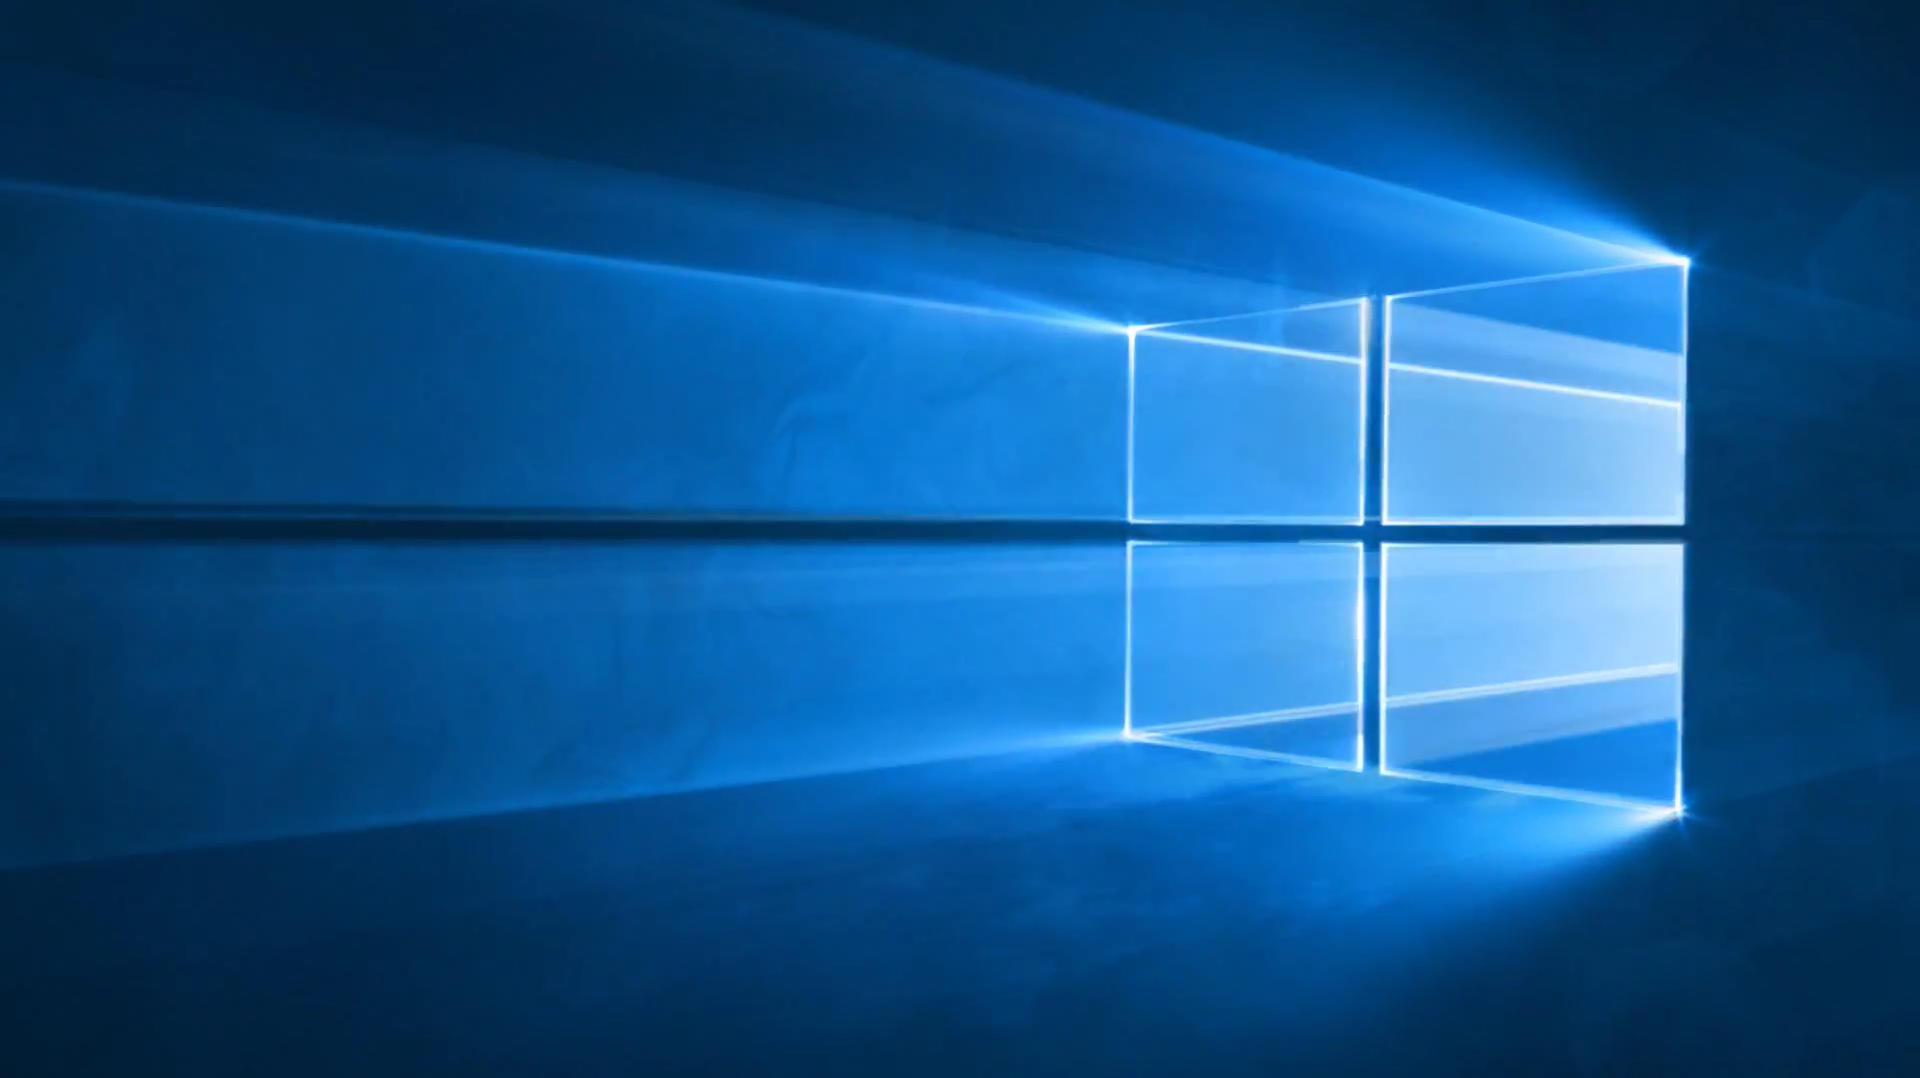 Windows10 wallpaper